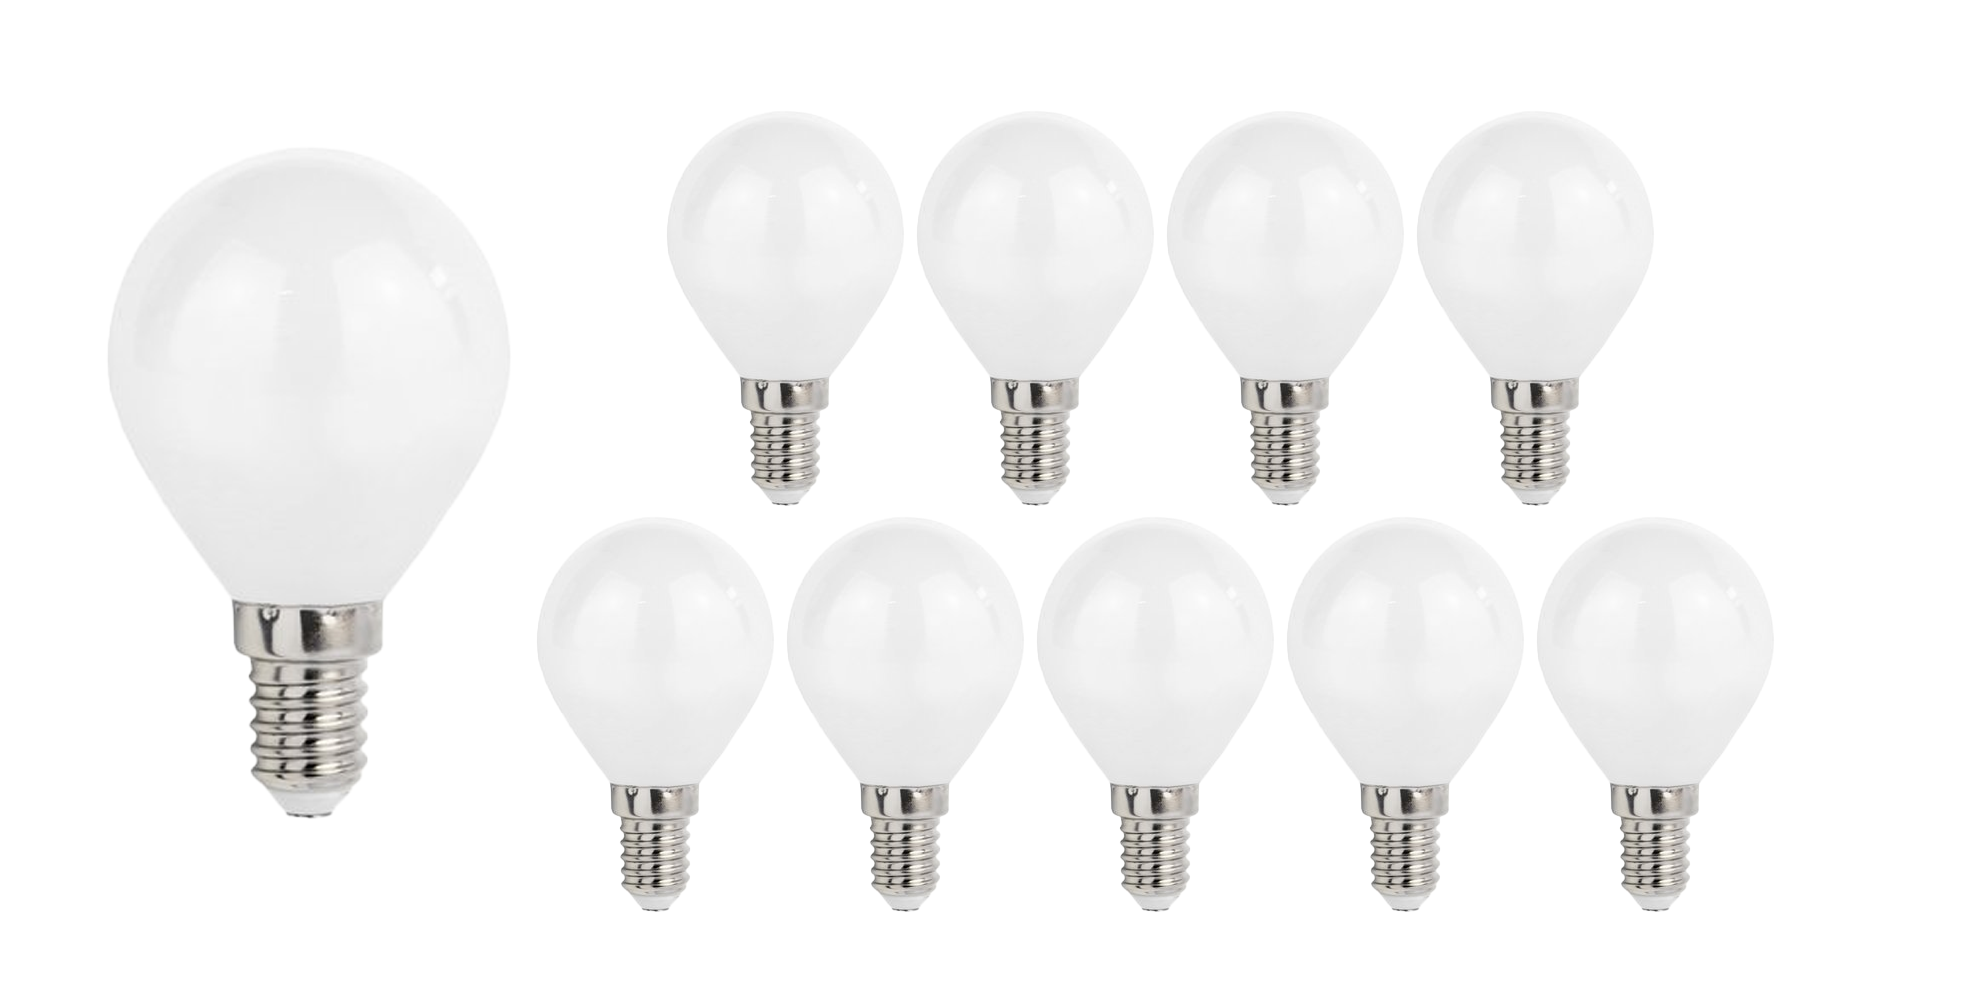 Aannames, aannames. Raad eens als Subsidie Voordeelpak 10 stuks - E14 LED lamp - 4W vervangt 30W -  Ledlichtdiscounter.nl